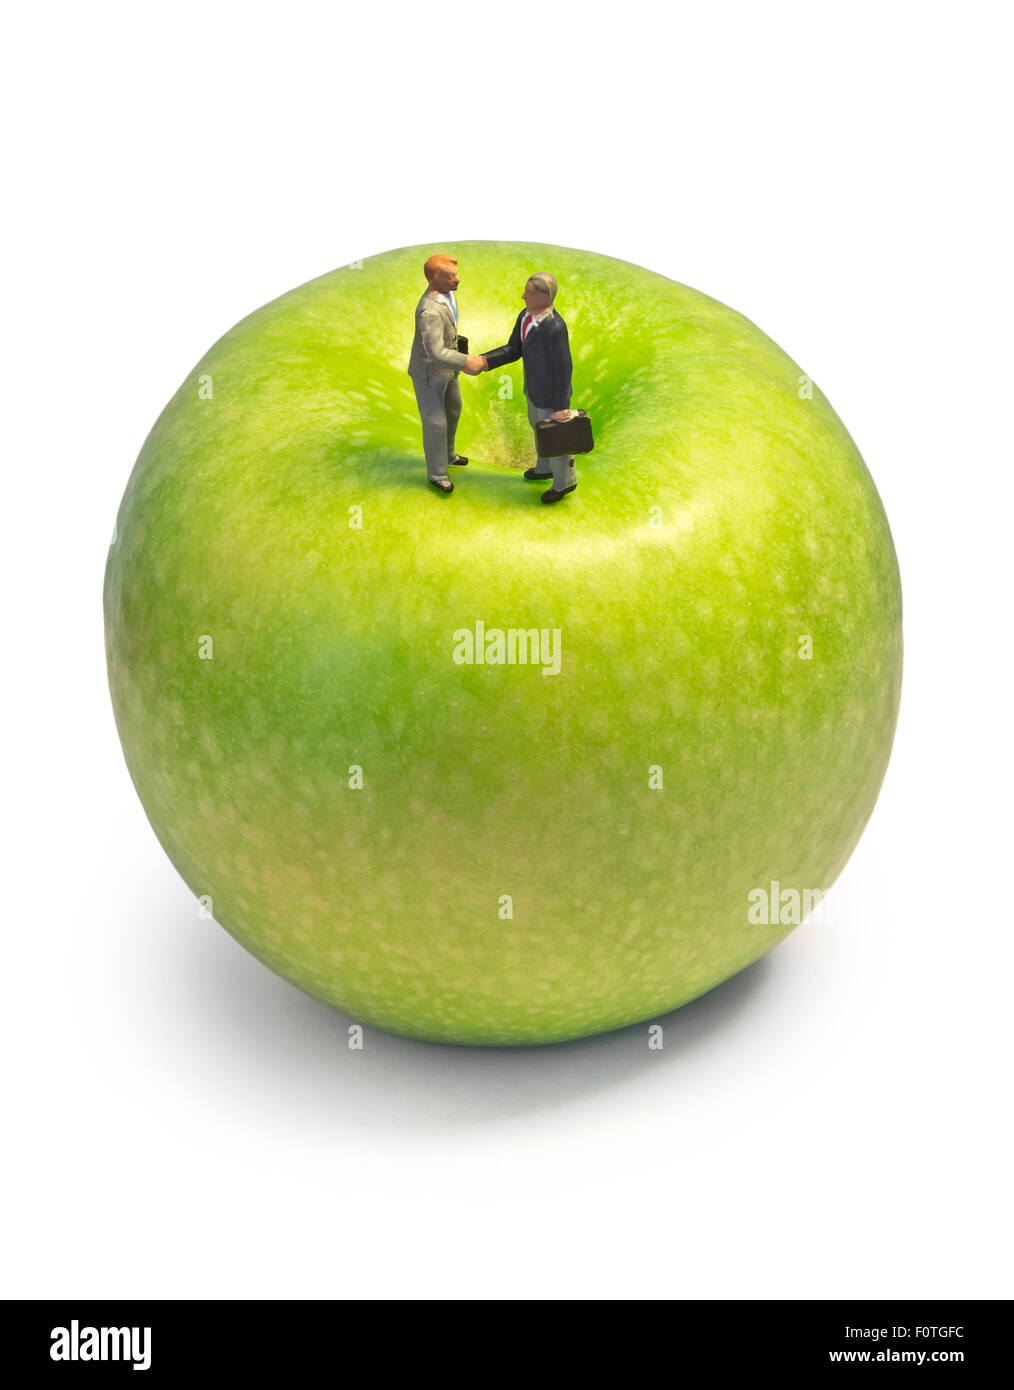 Miniature handshake apple, macro shot of business men figurines shaking hands on top of green apple Stock Photo